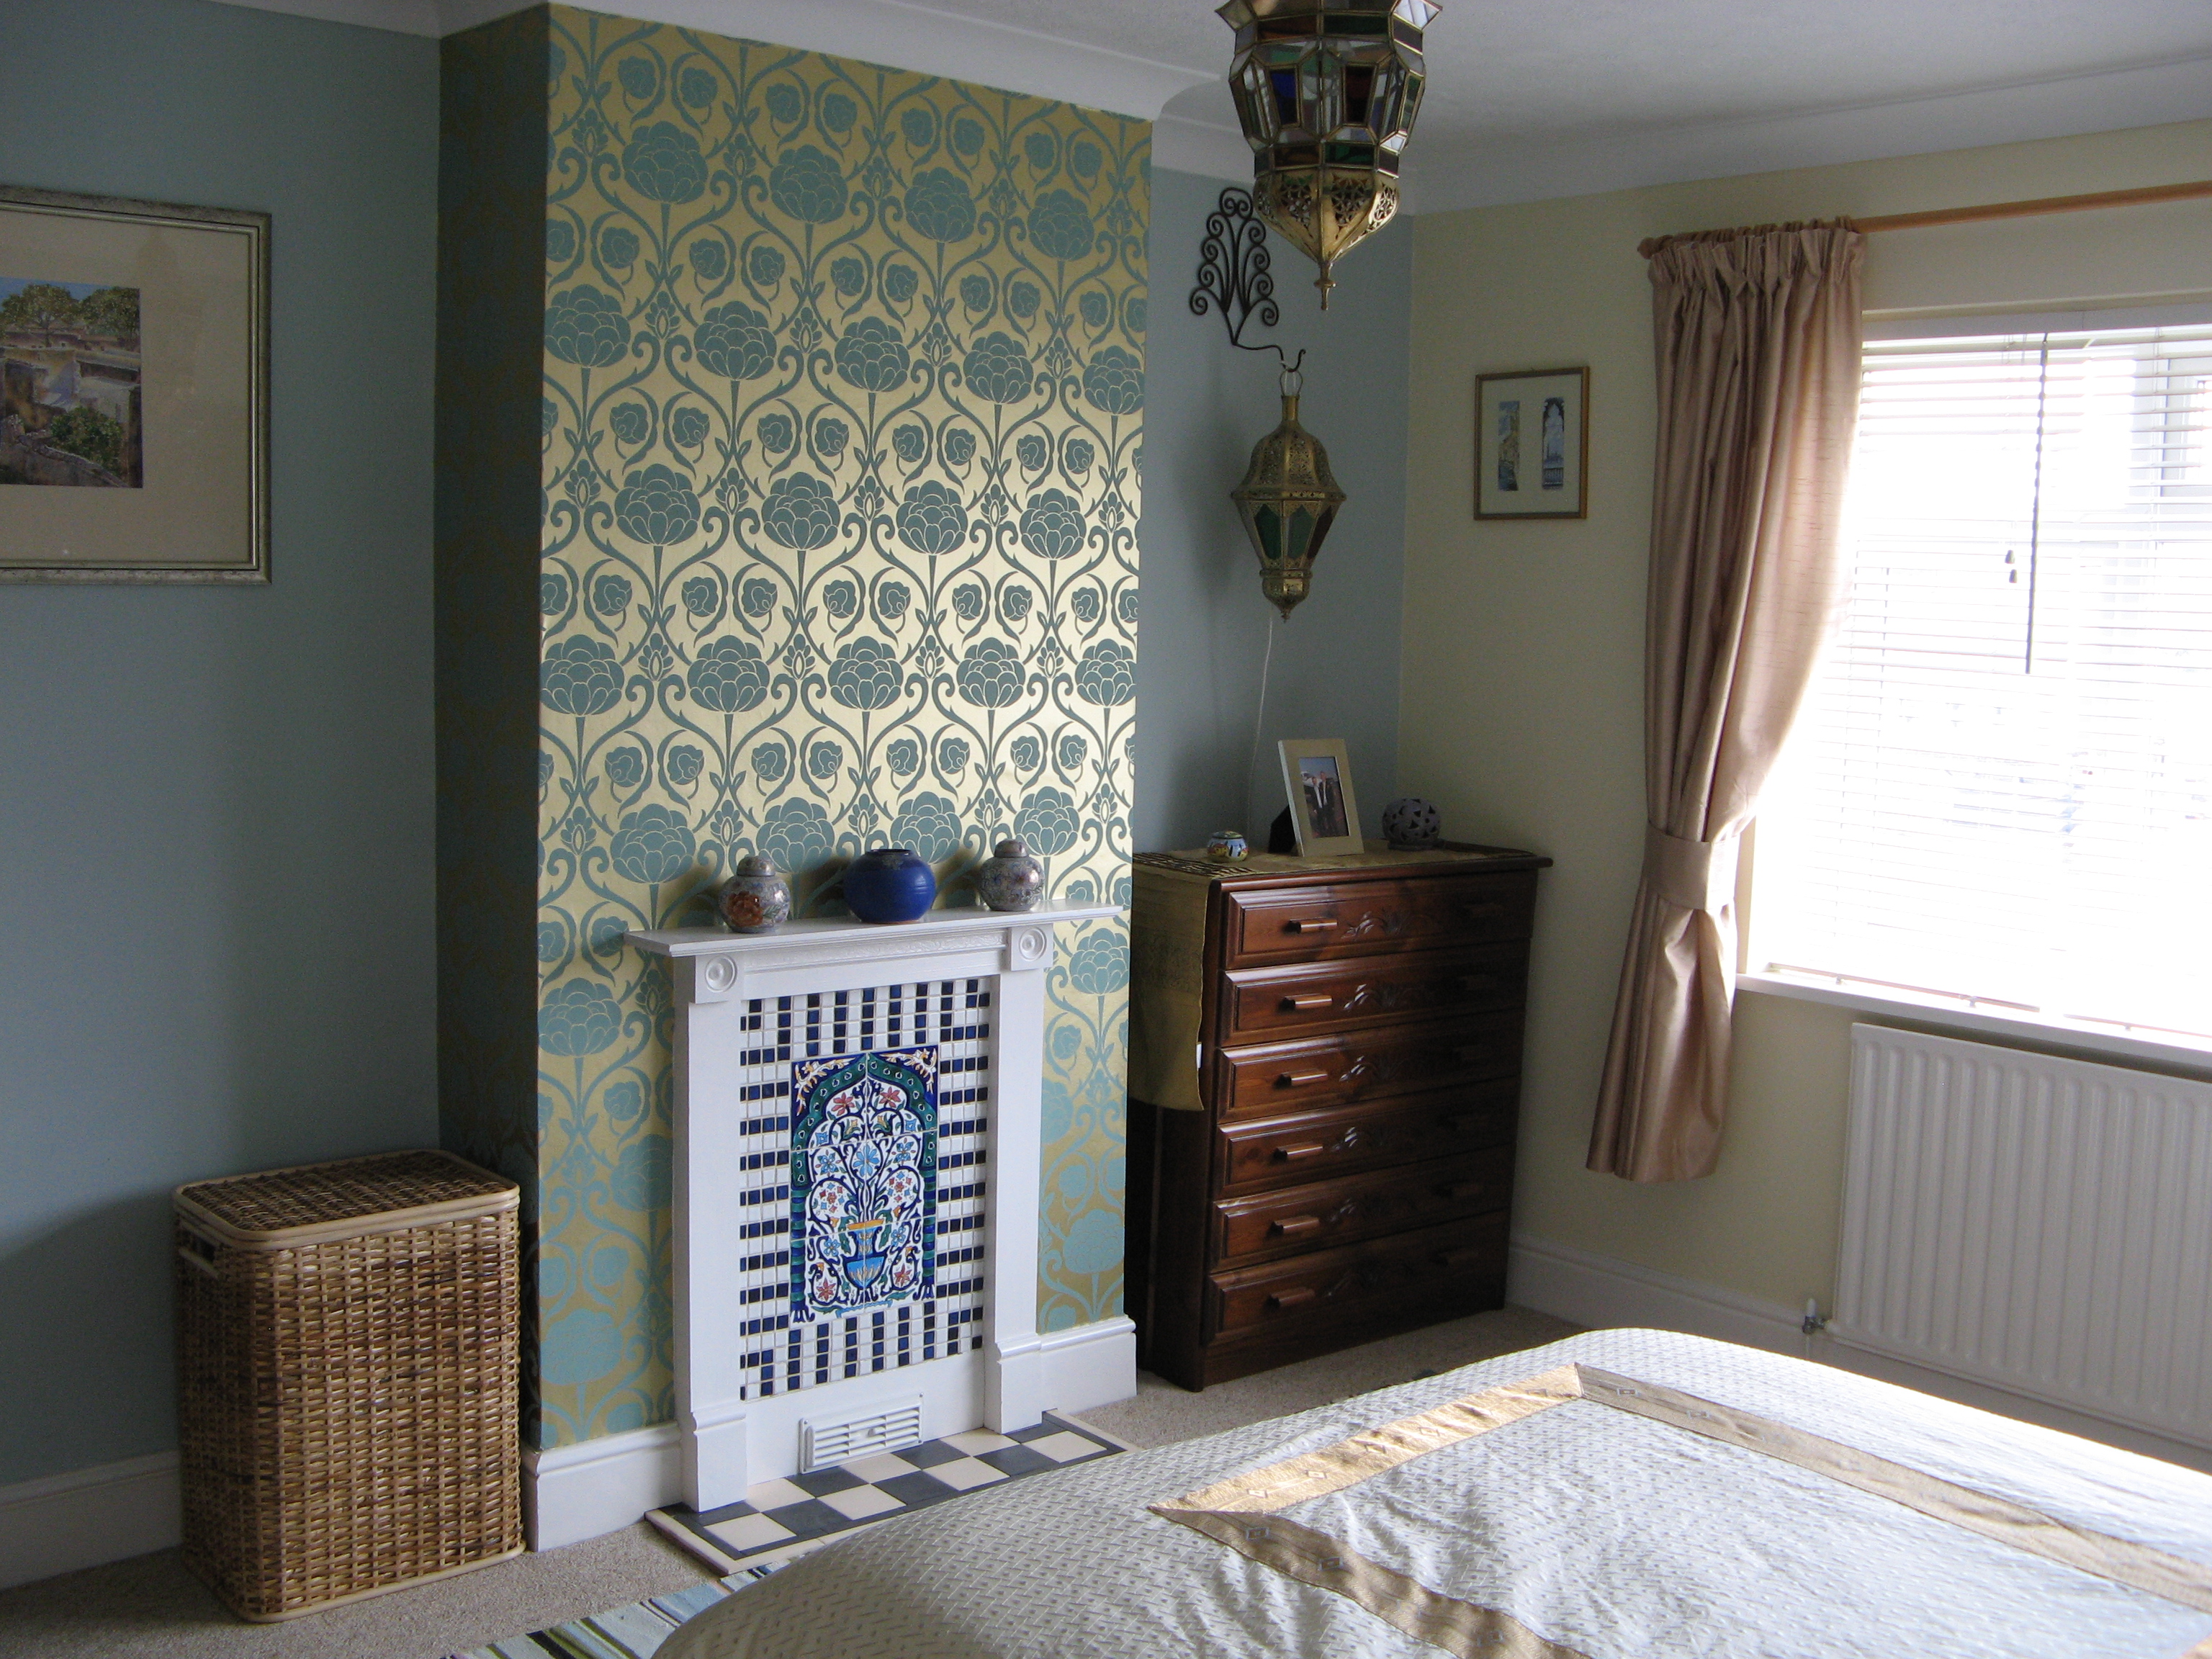 chimney breast wallpaper,room,property,furniture,wall,bedroom